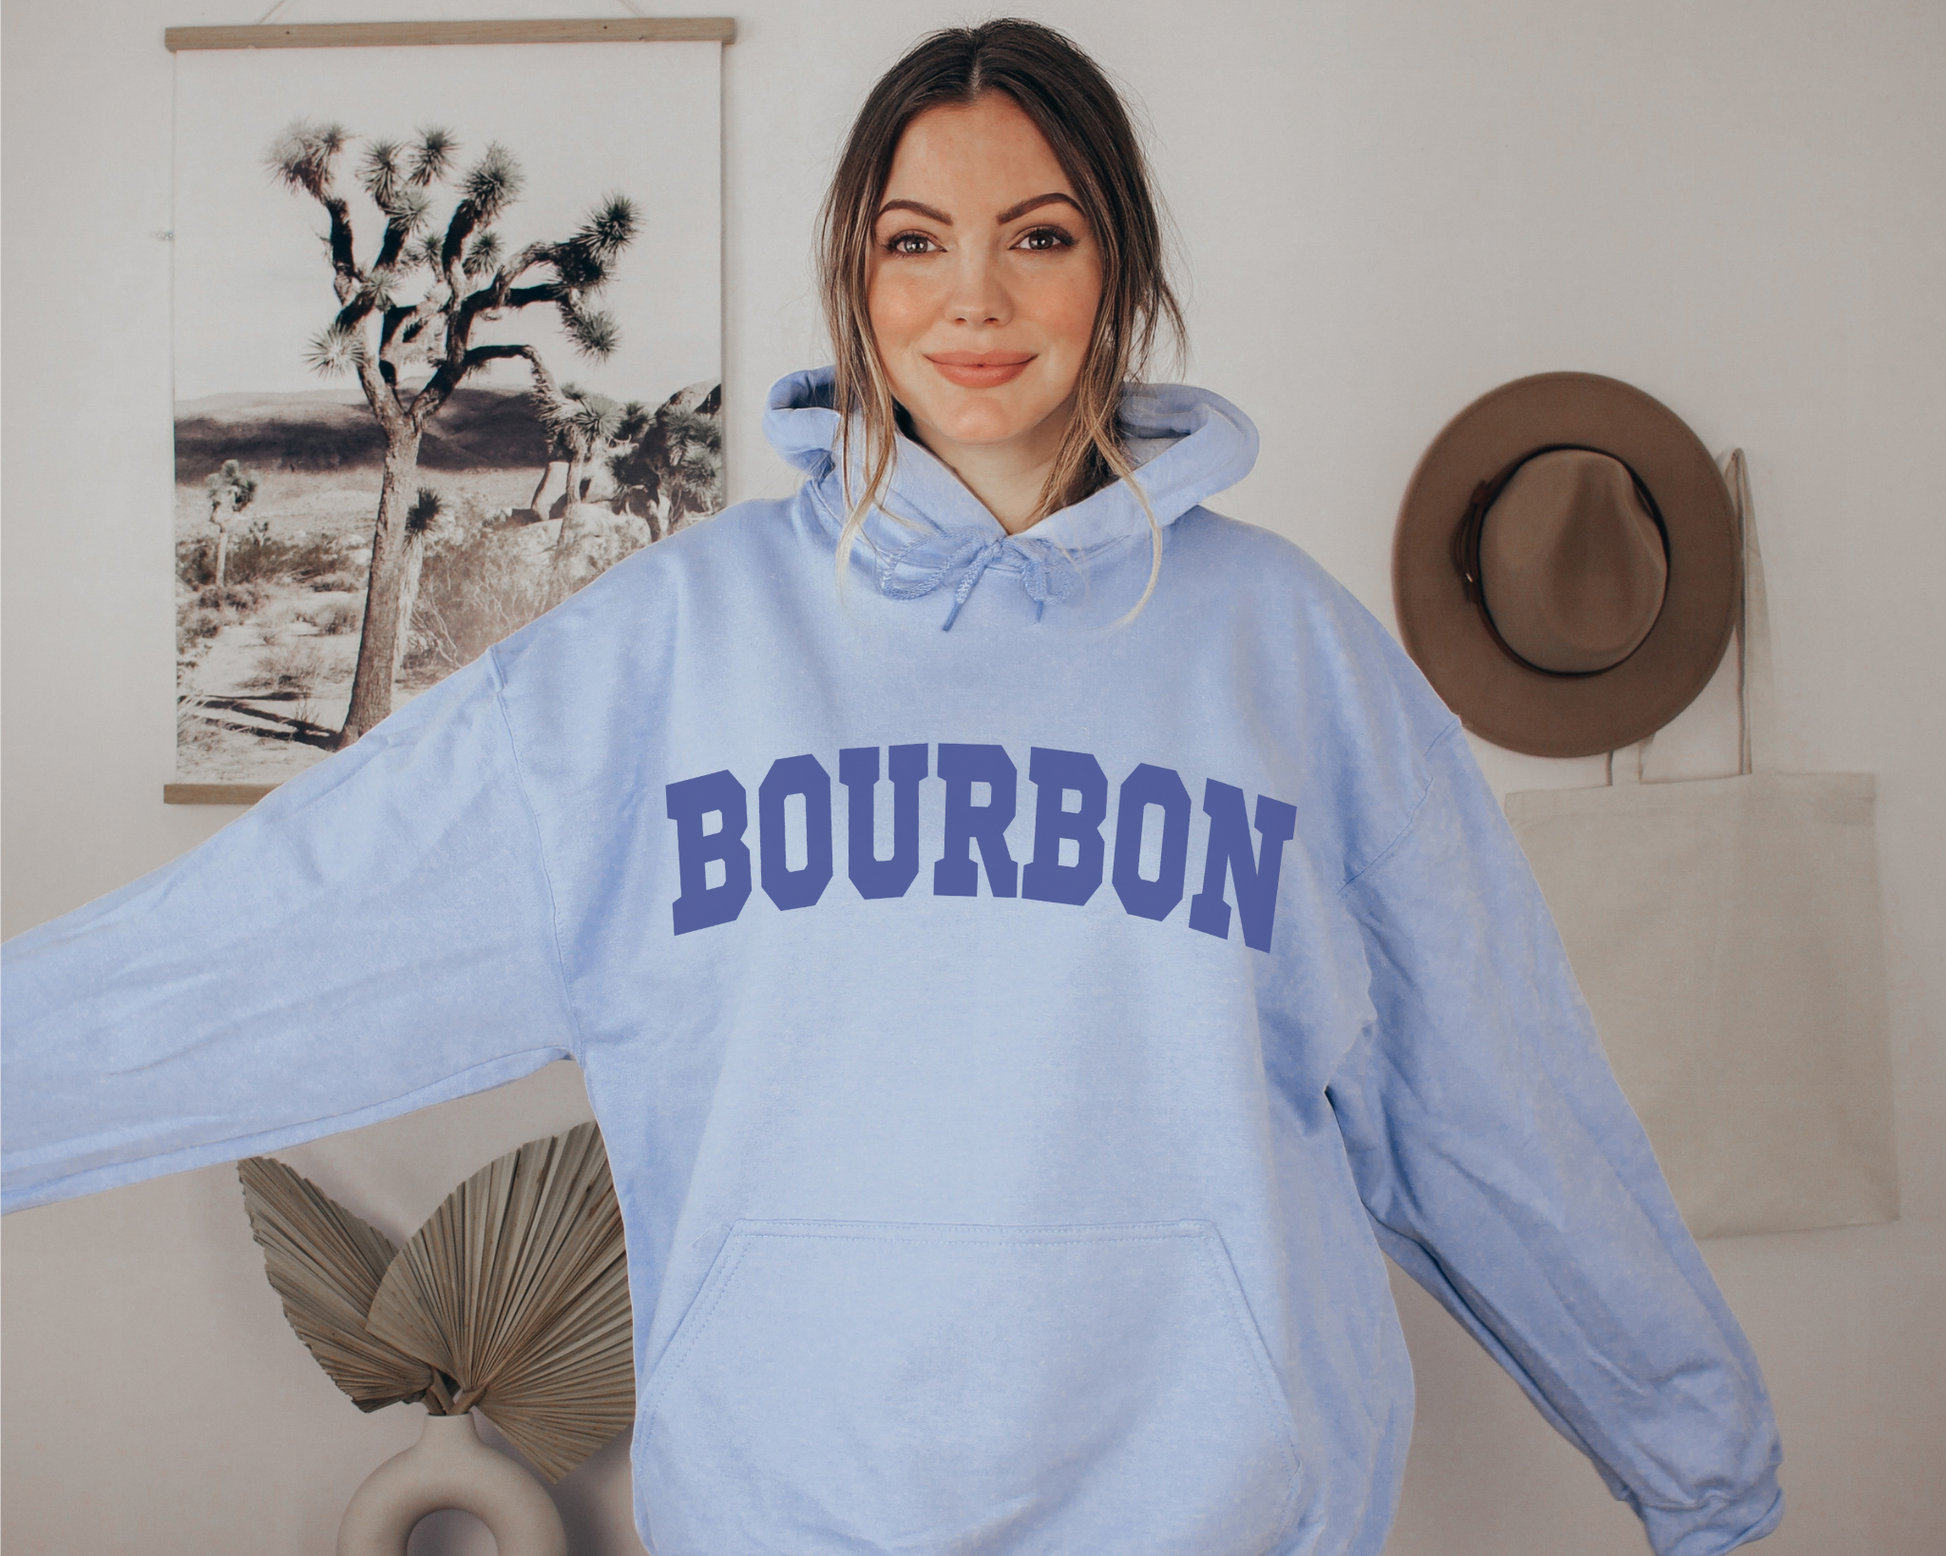 Bourbon Hoodie in Light Blue on a Female